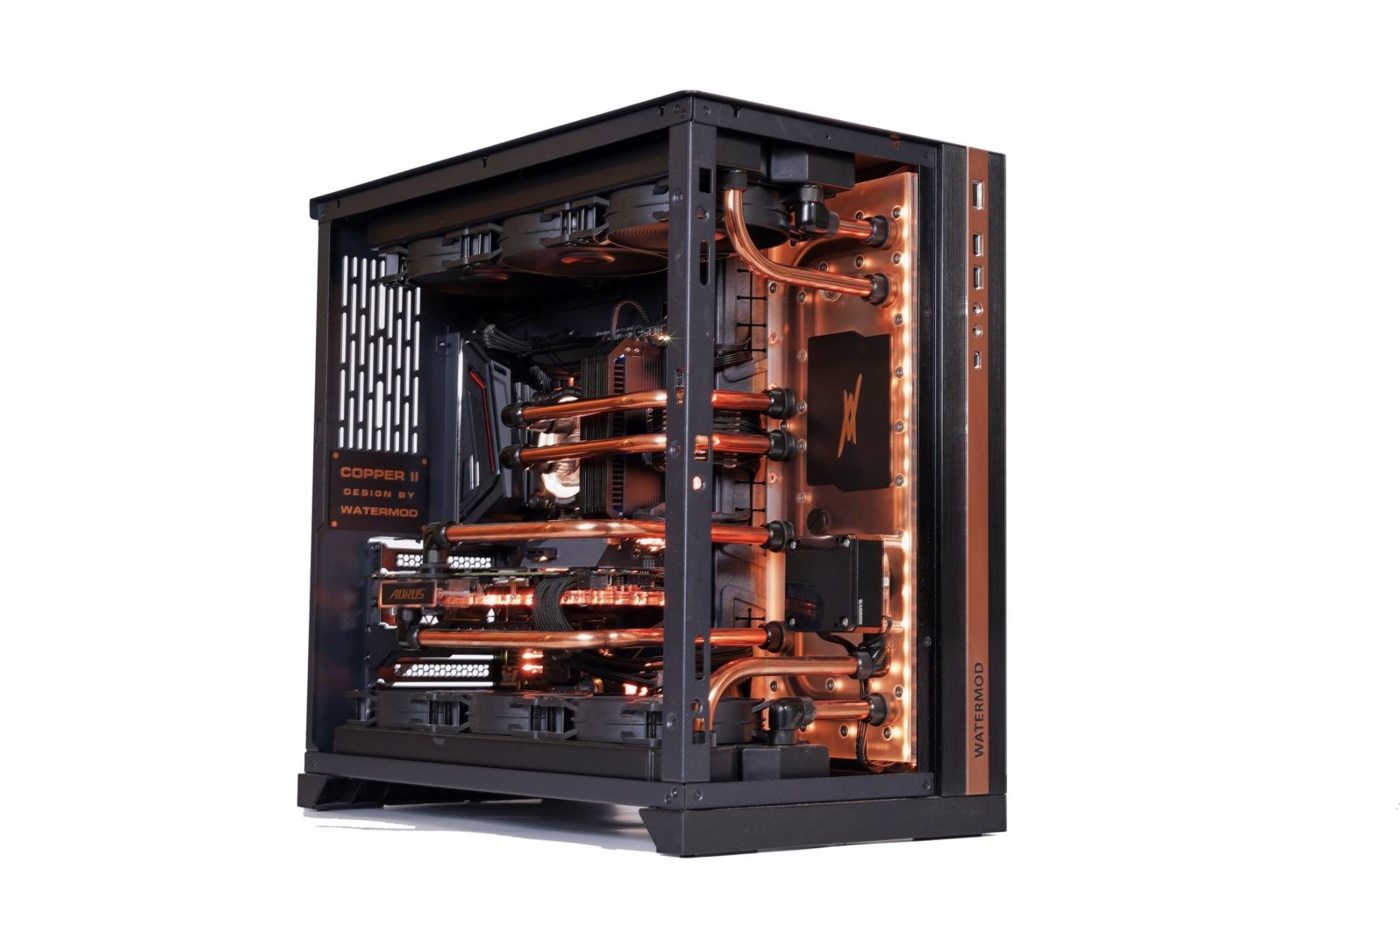 amazing gaming machines - copper theme pc - Copper Ii Design By Watermod Aurus Watermod